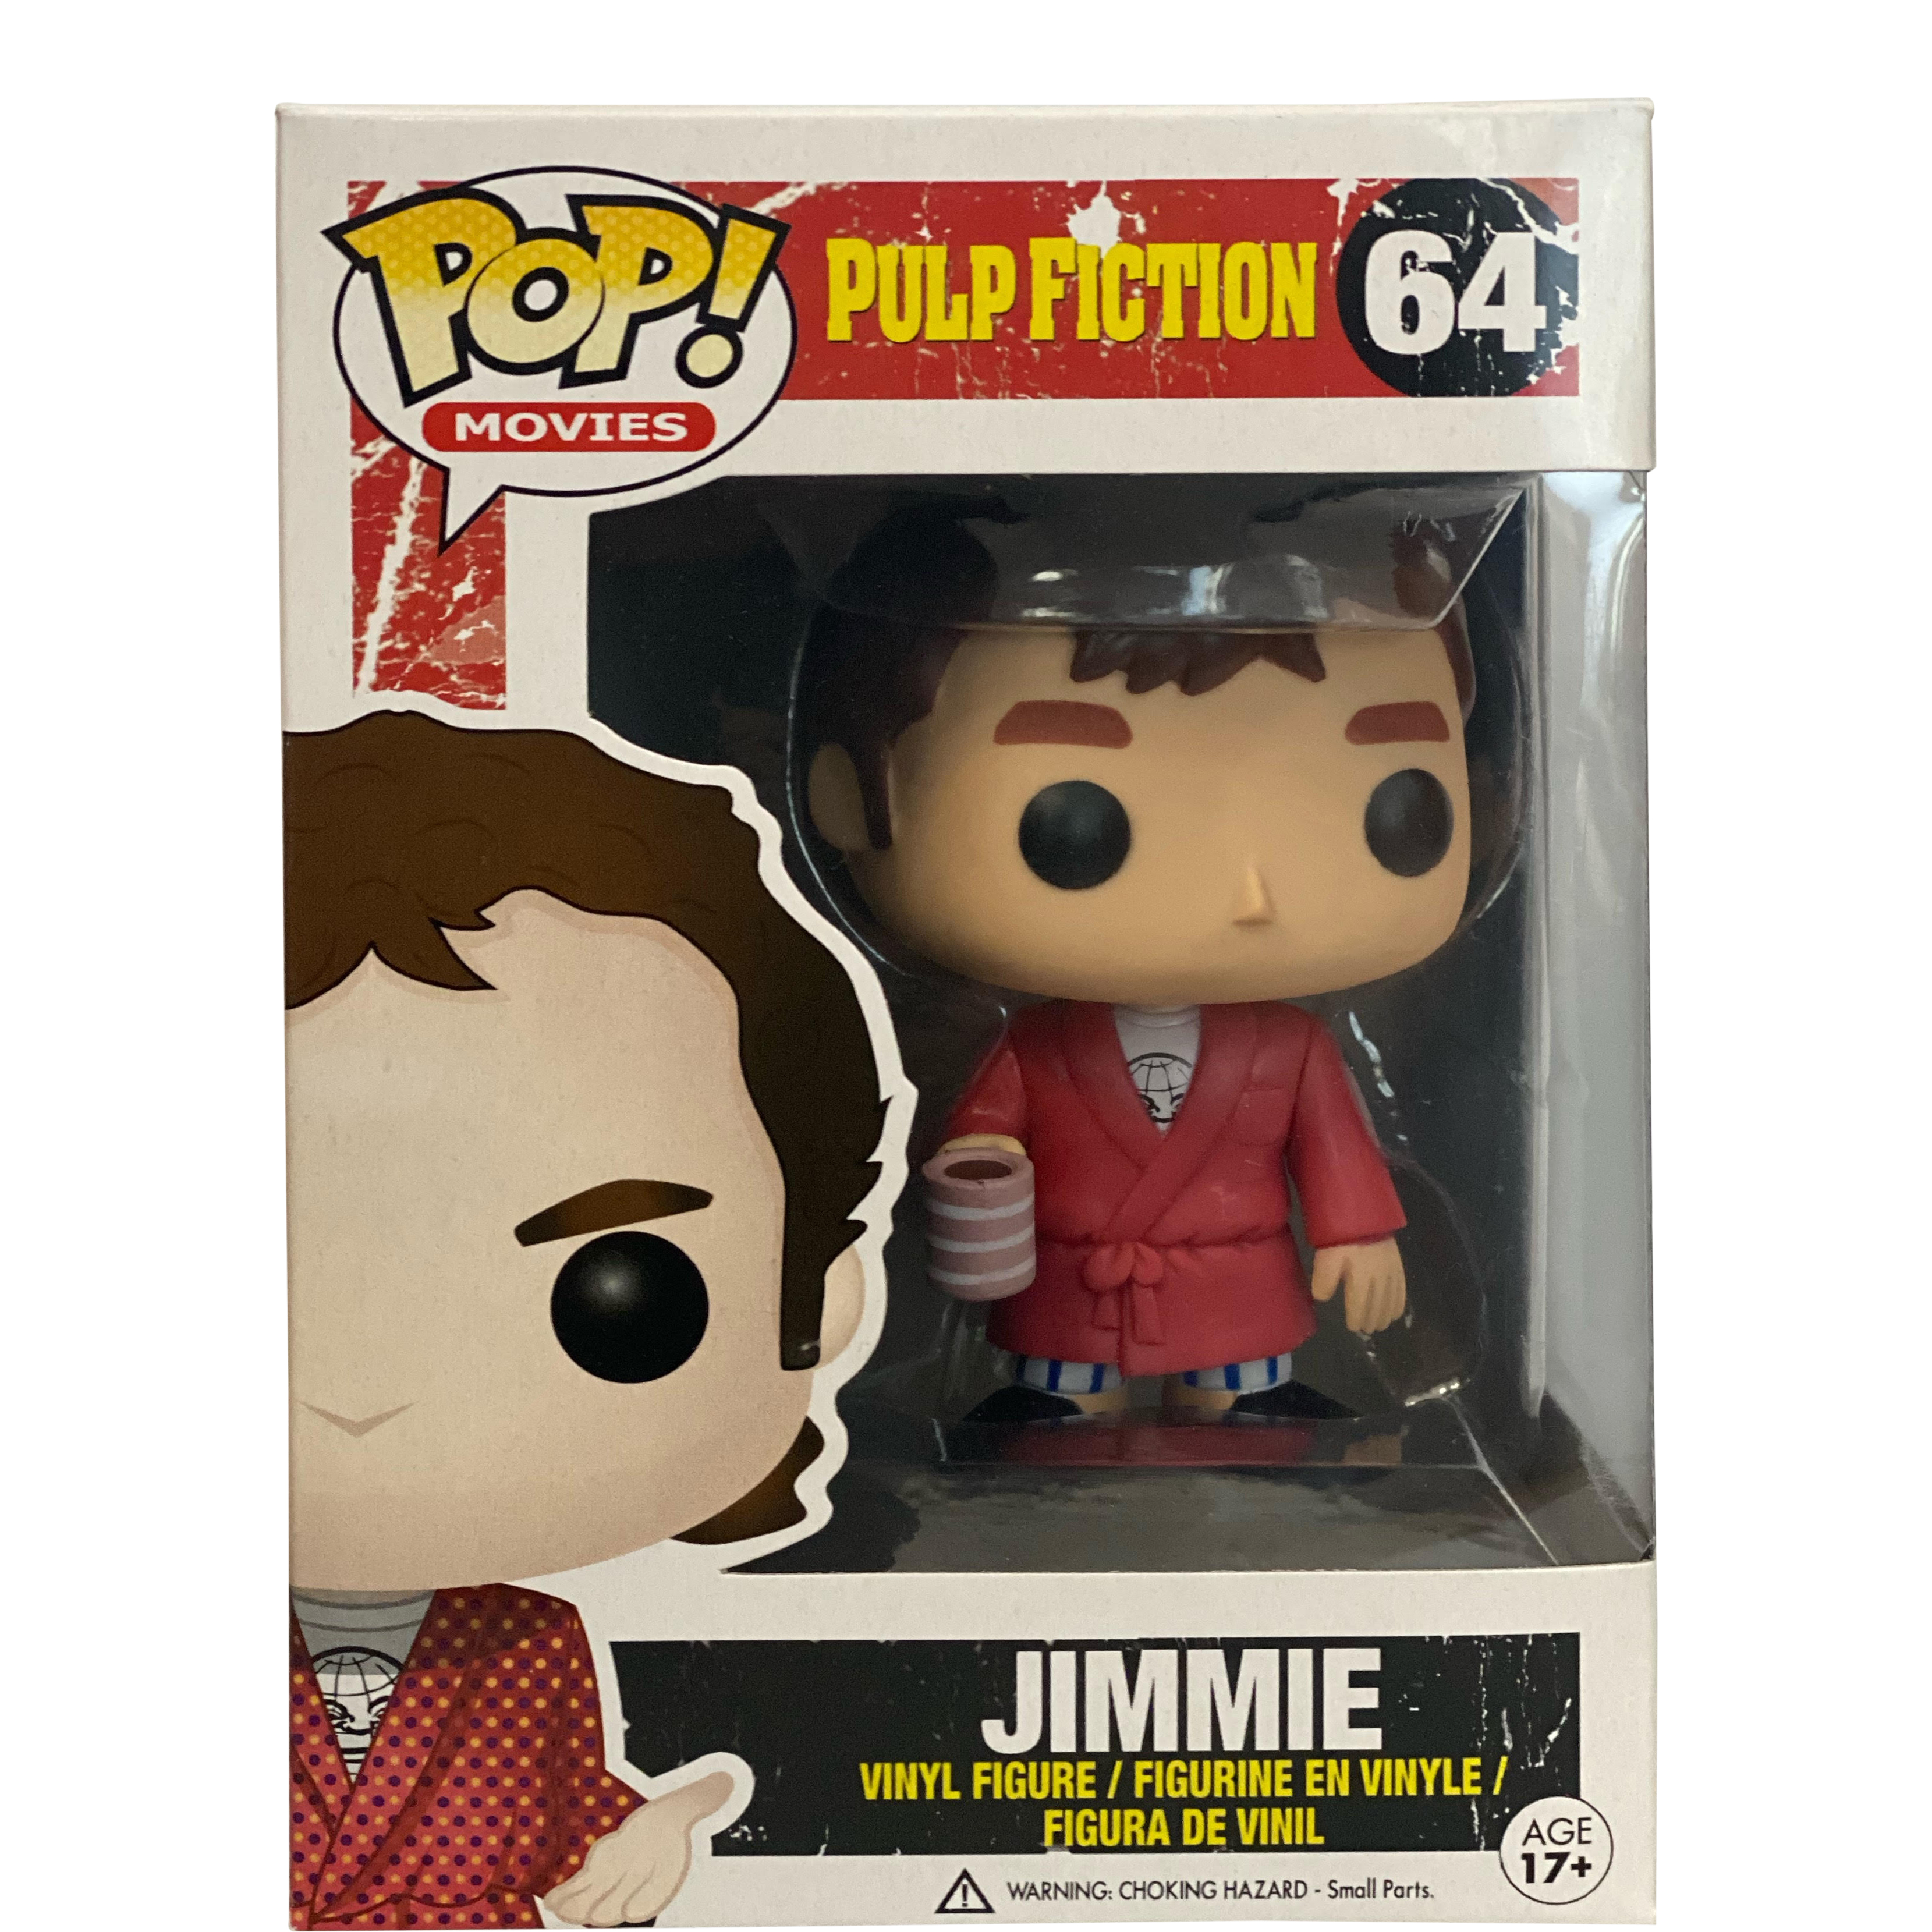 Funko Pop! Movies Pulp Fiction Jimmie Figure #64 - JP